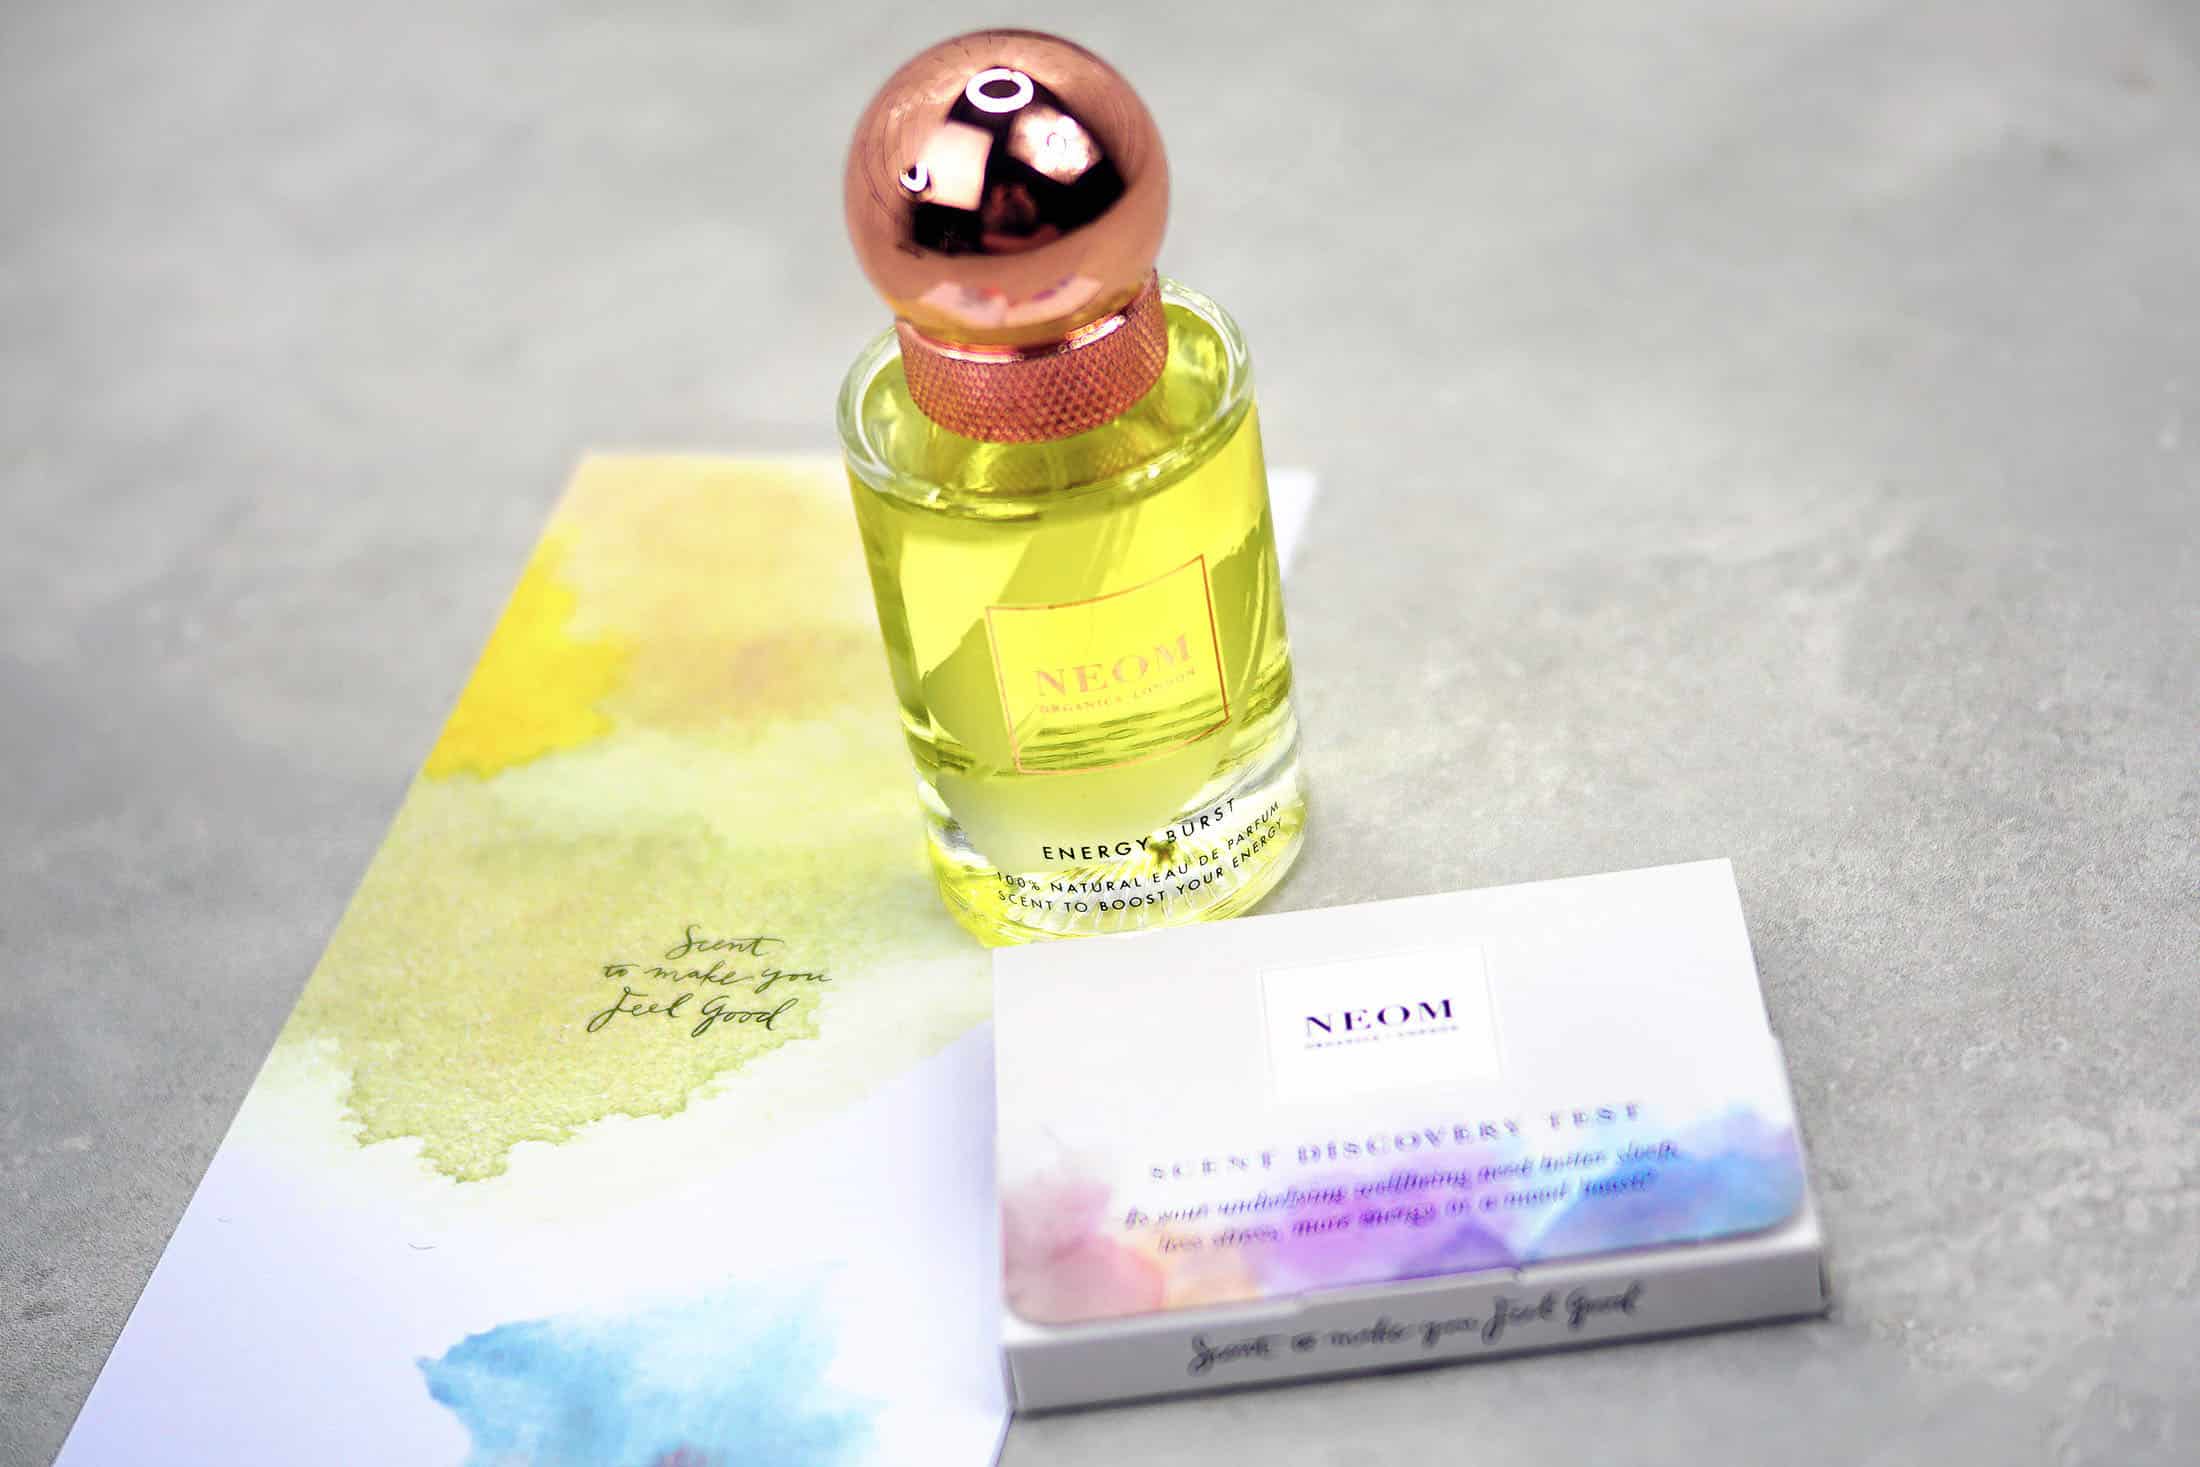 Neom Energy Burst Eau de Parfum and Scent Discovery Test